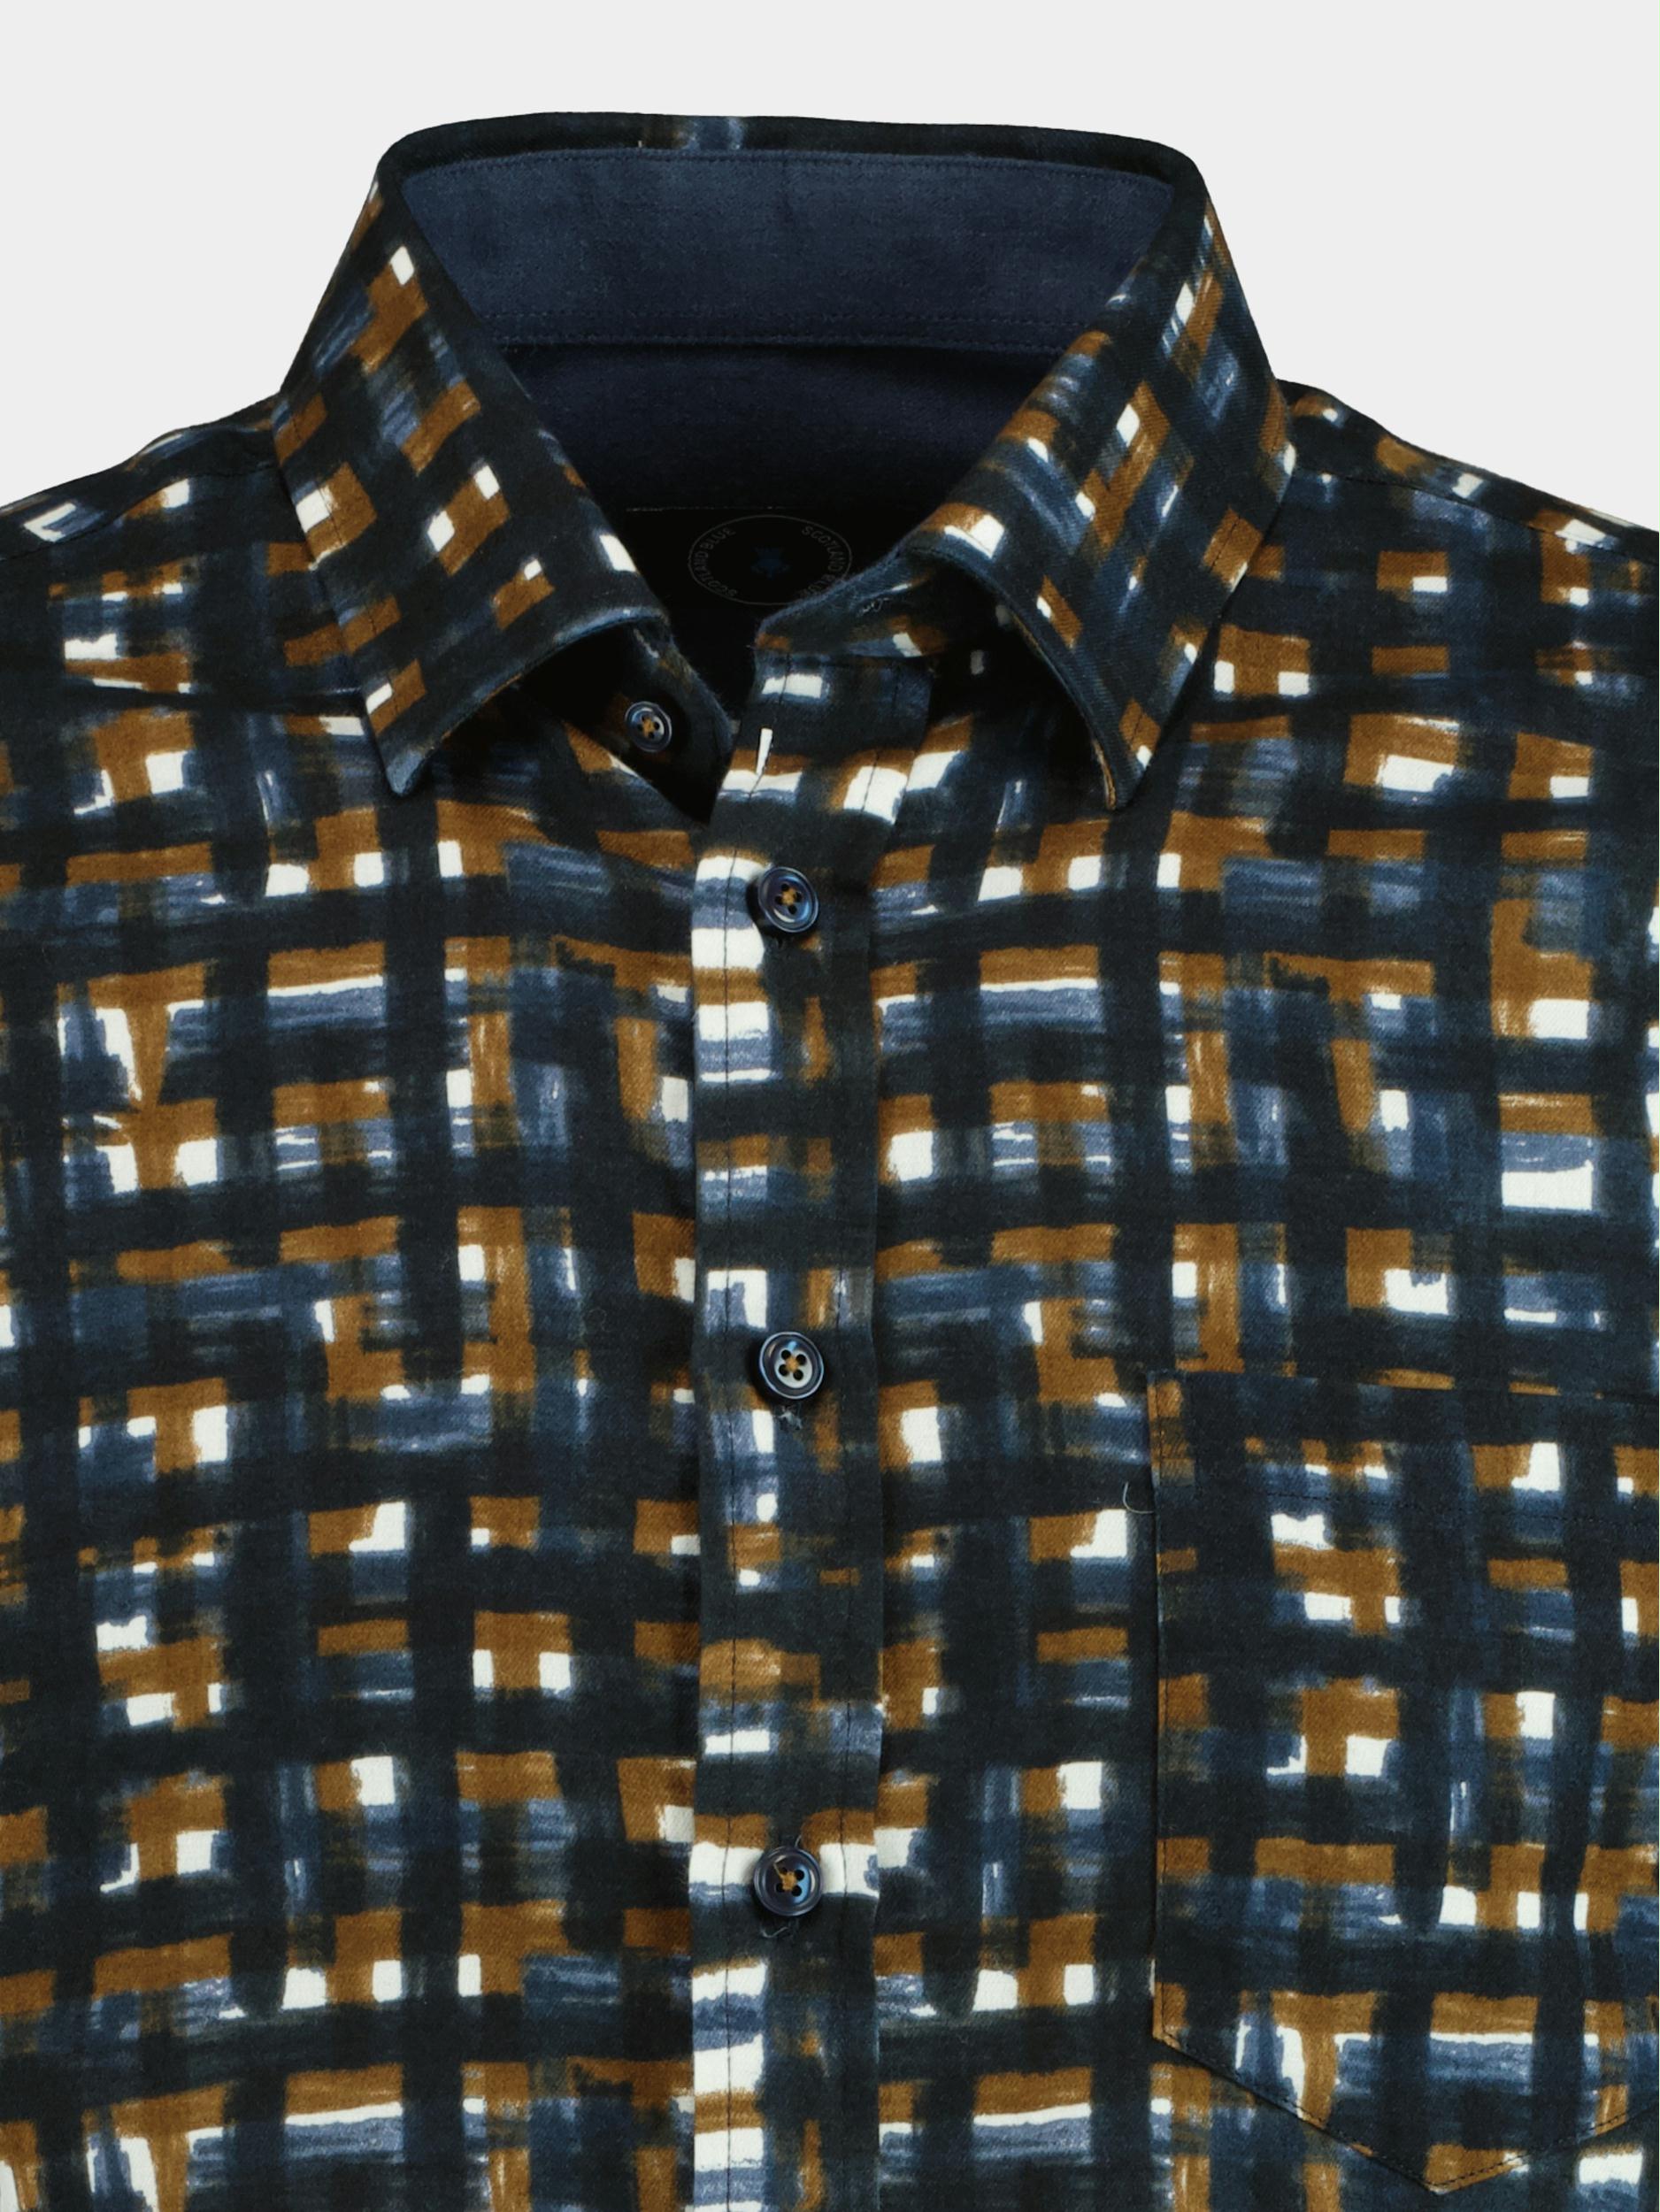 Scotland Blue Casual hemd lange mouw Bruin Ward Flanel Dig Printed Shirt 22307WA05SB/359 khaki